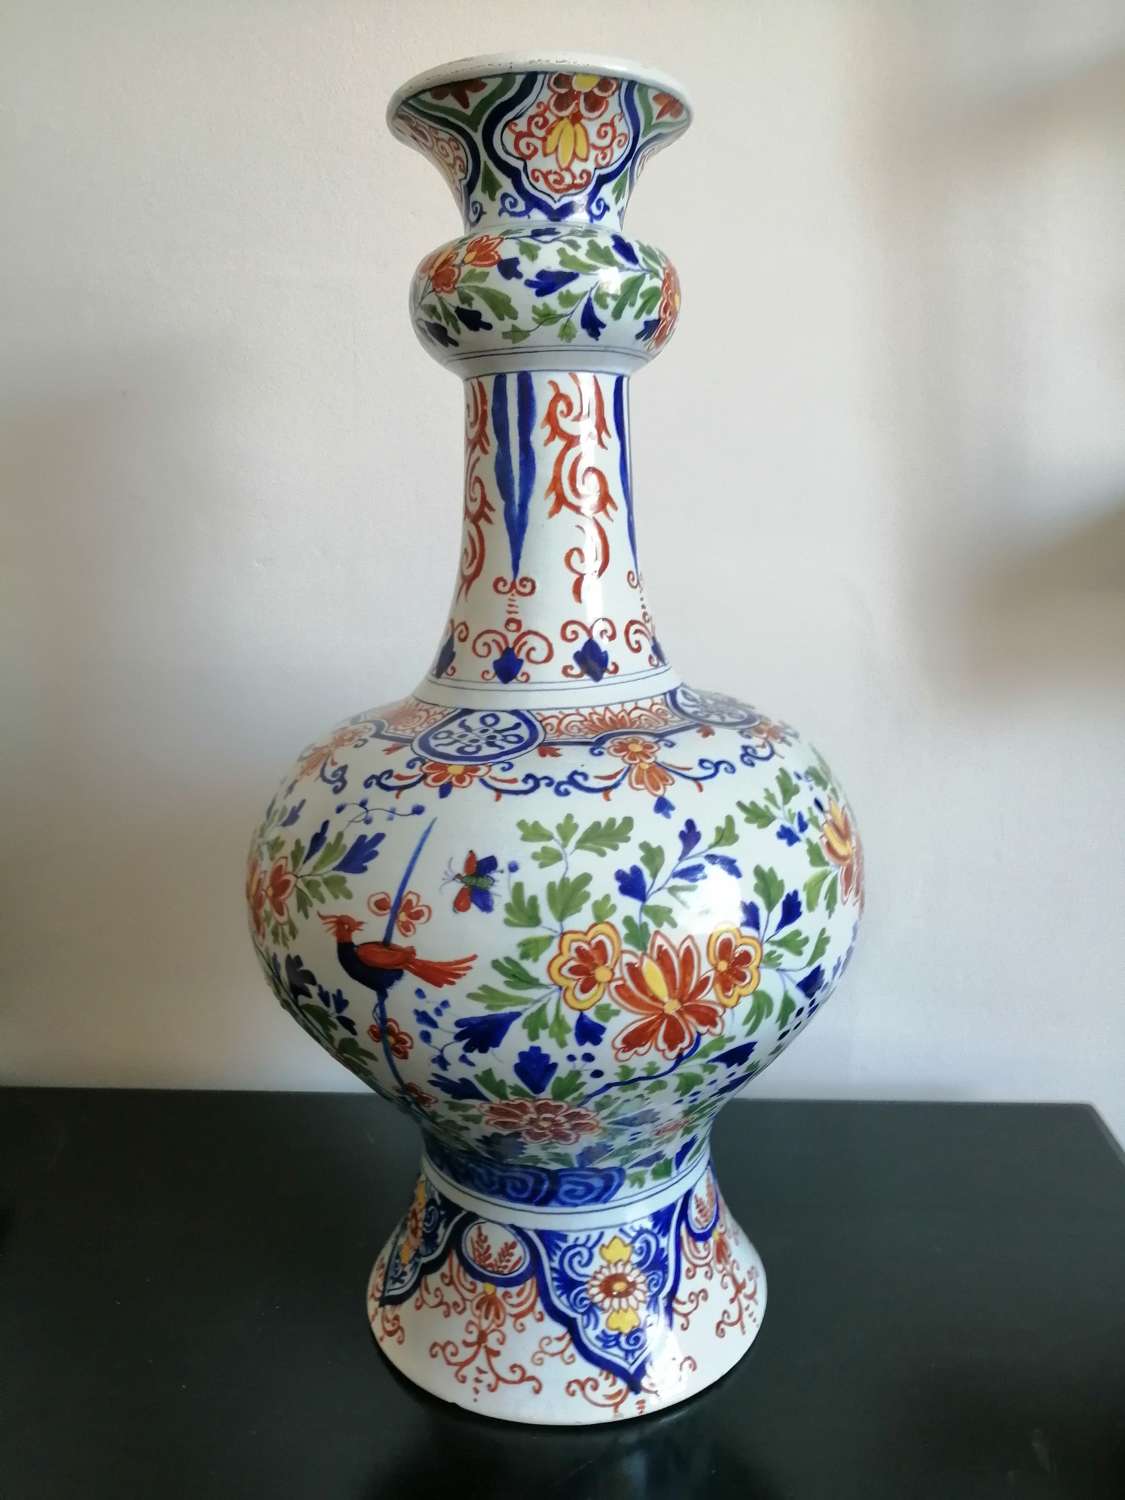 An unusual polychrome Dutch delft gourd vase